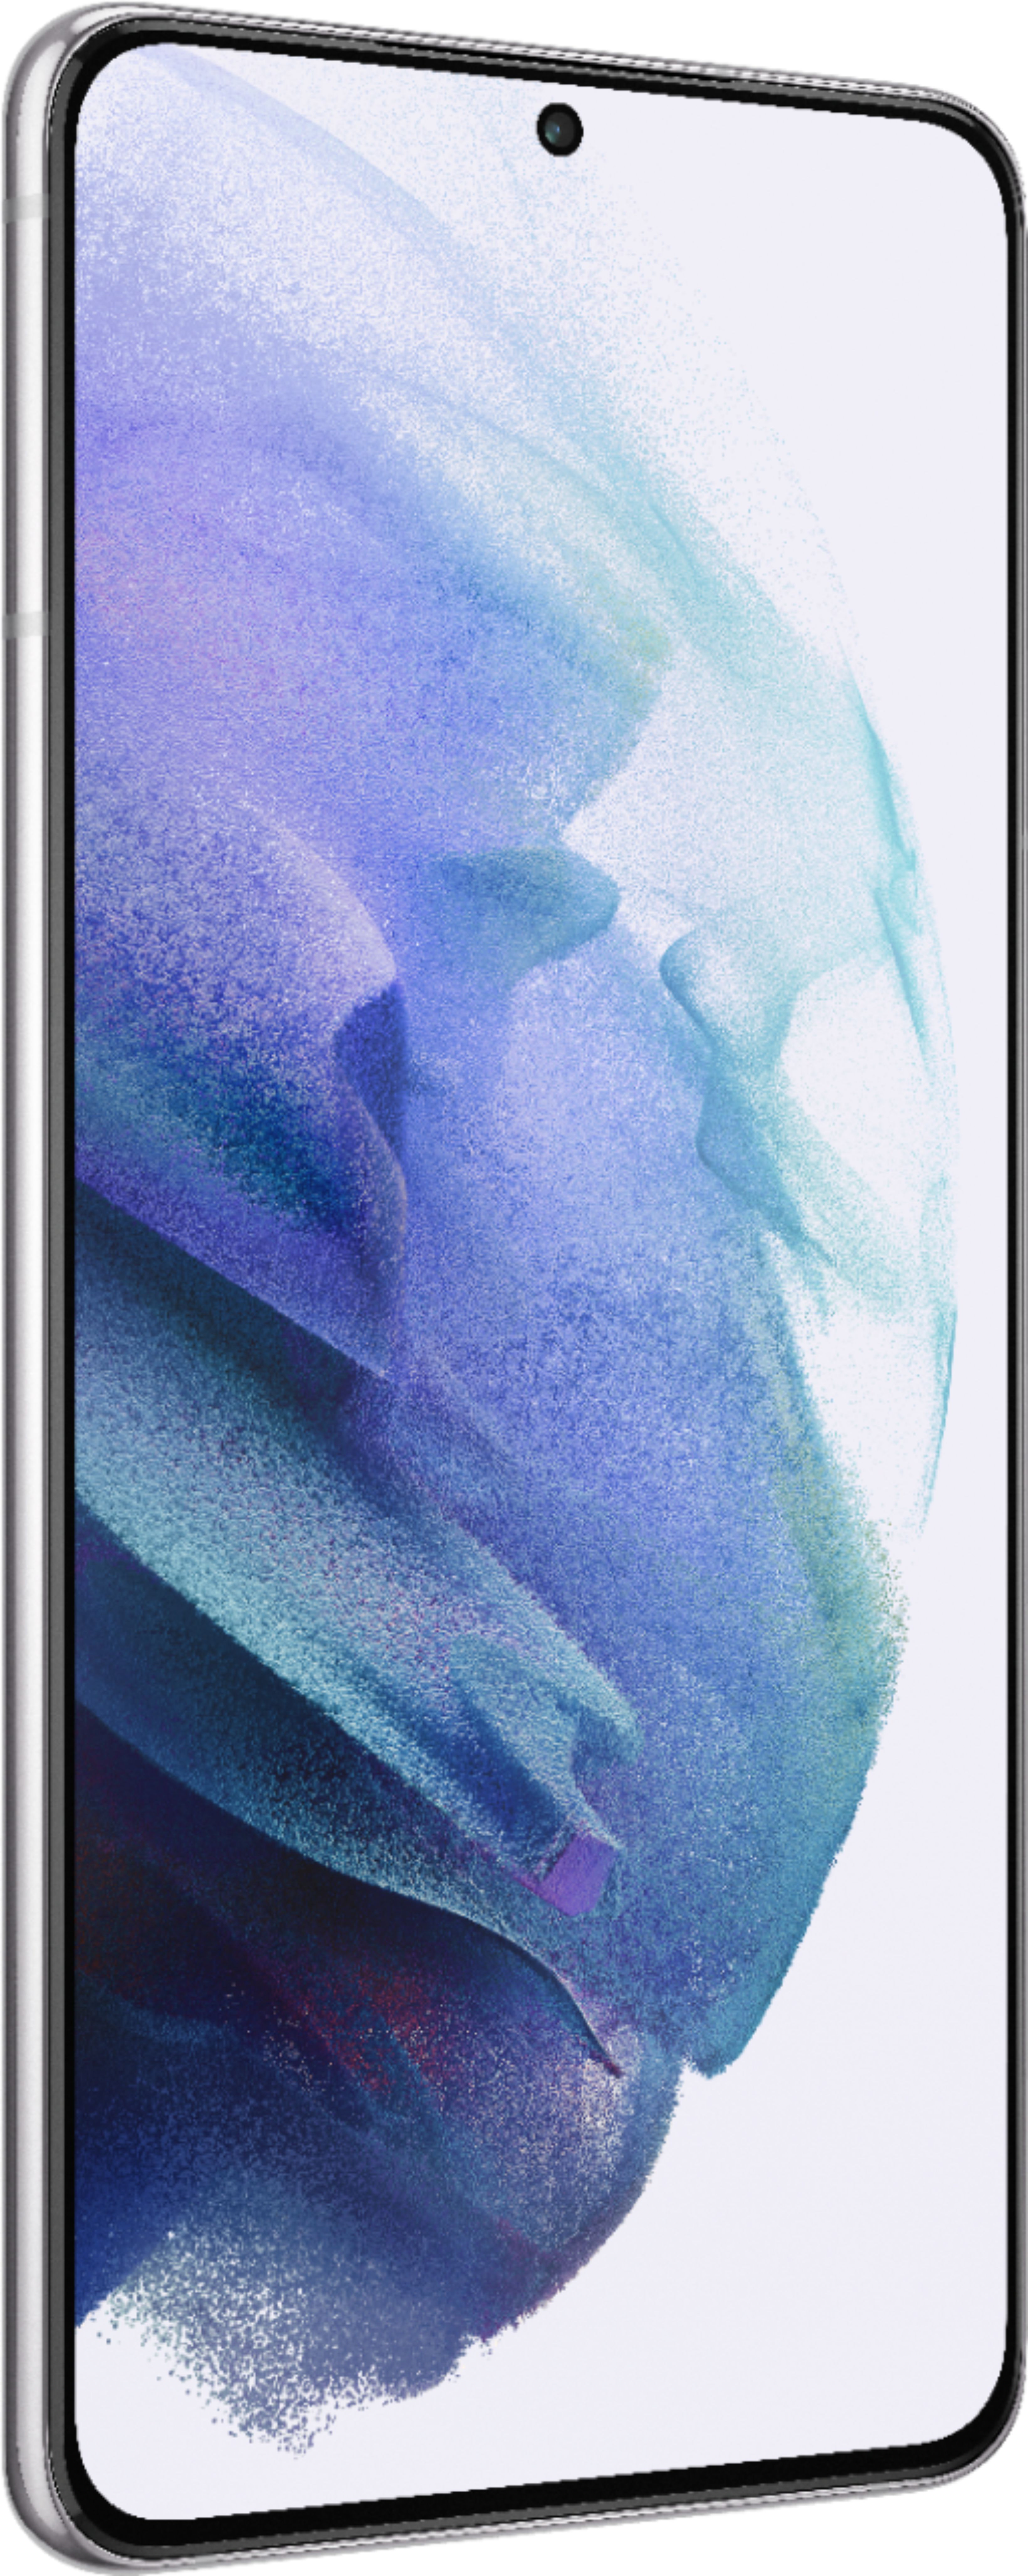 Samsung Galaxy S21 Ultra, 5G, 128GB, Phantom Silver, Unlocked